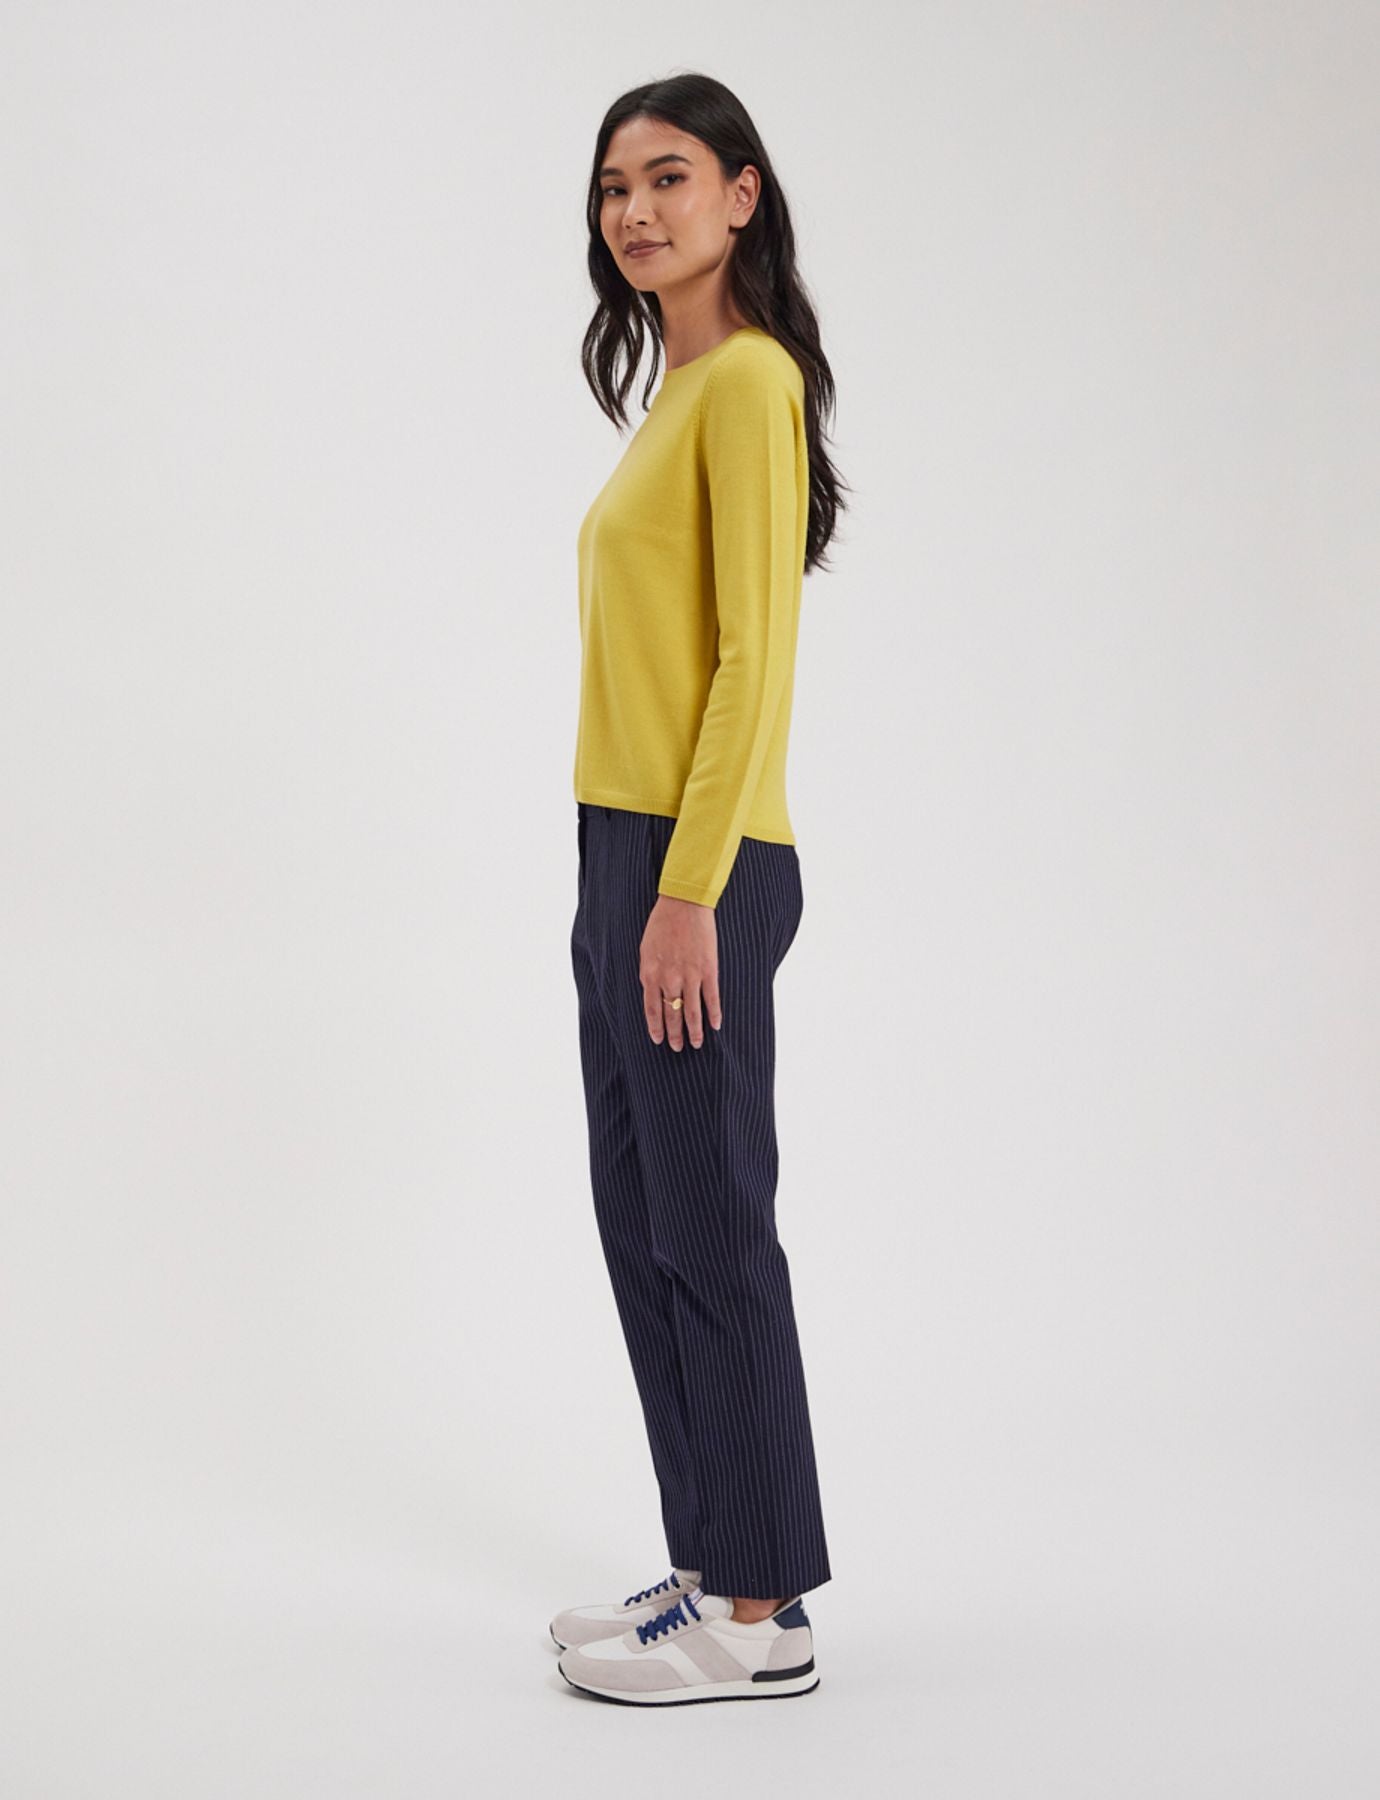 sweater-angelina-laine-merinos-yellow